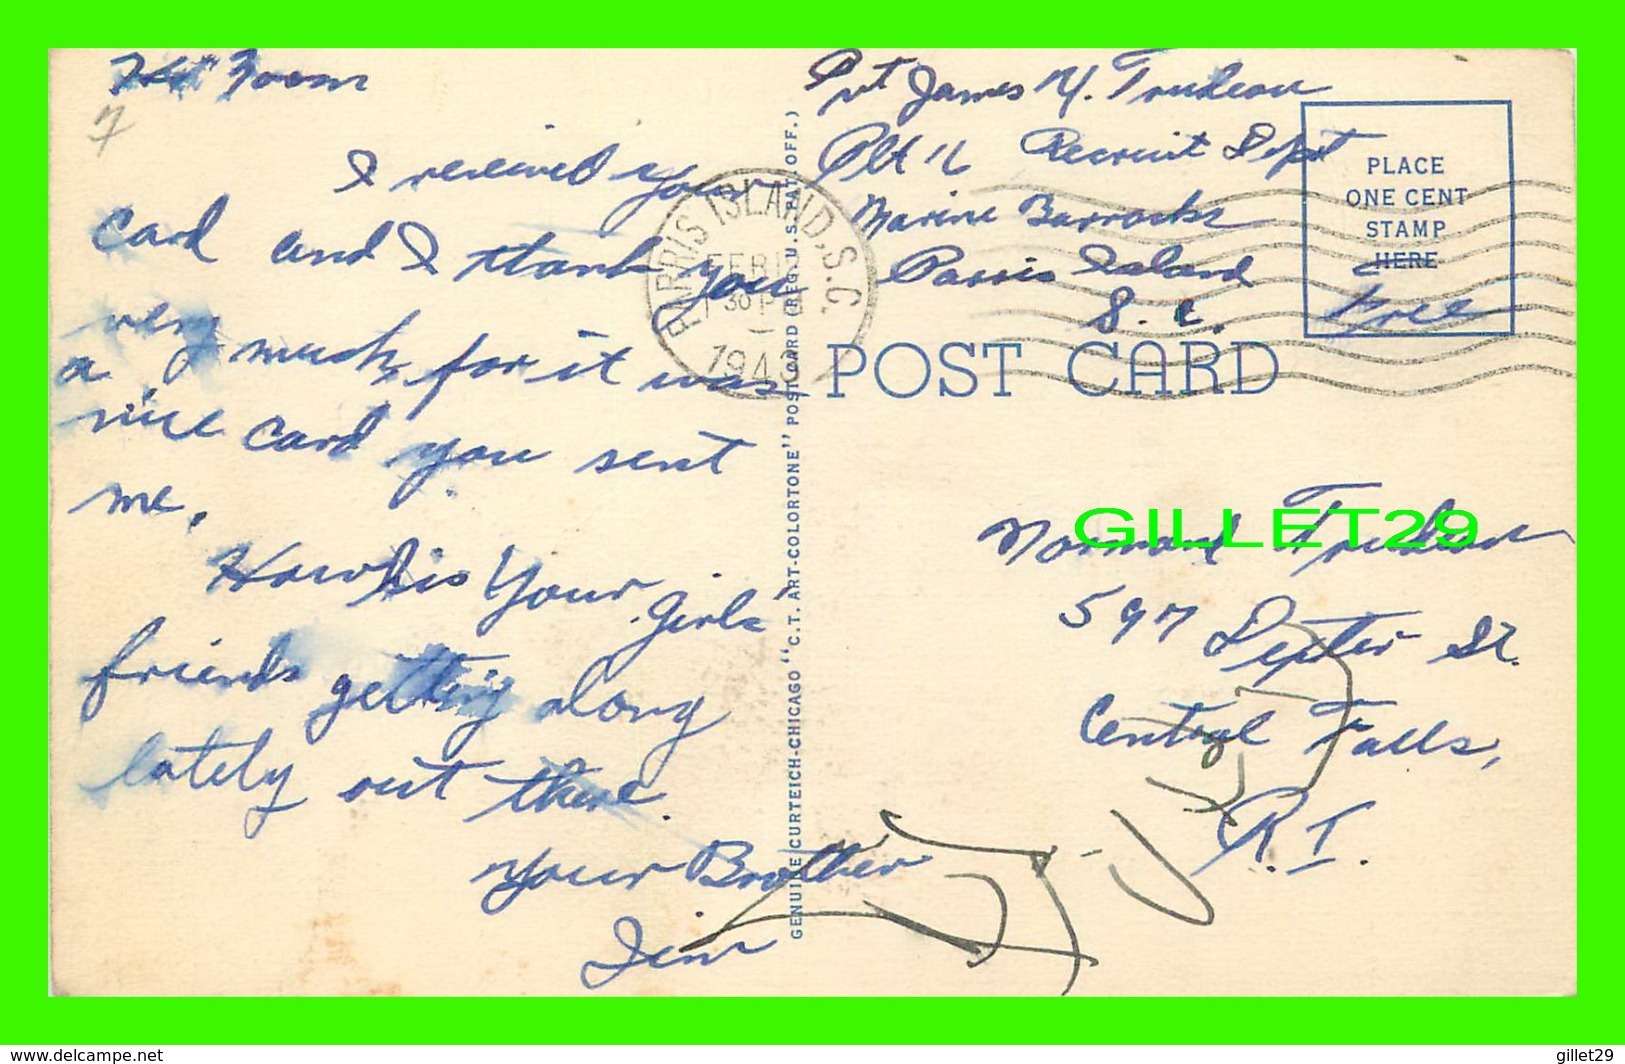 PARRIS ISLANDS, SC - MAIN DOCK, MARINE BARRACKS - TRAVEL IN 1943 - CURTEICH-CHICAGO - - Parris Island